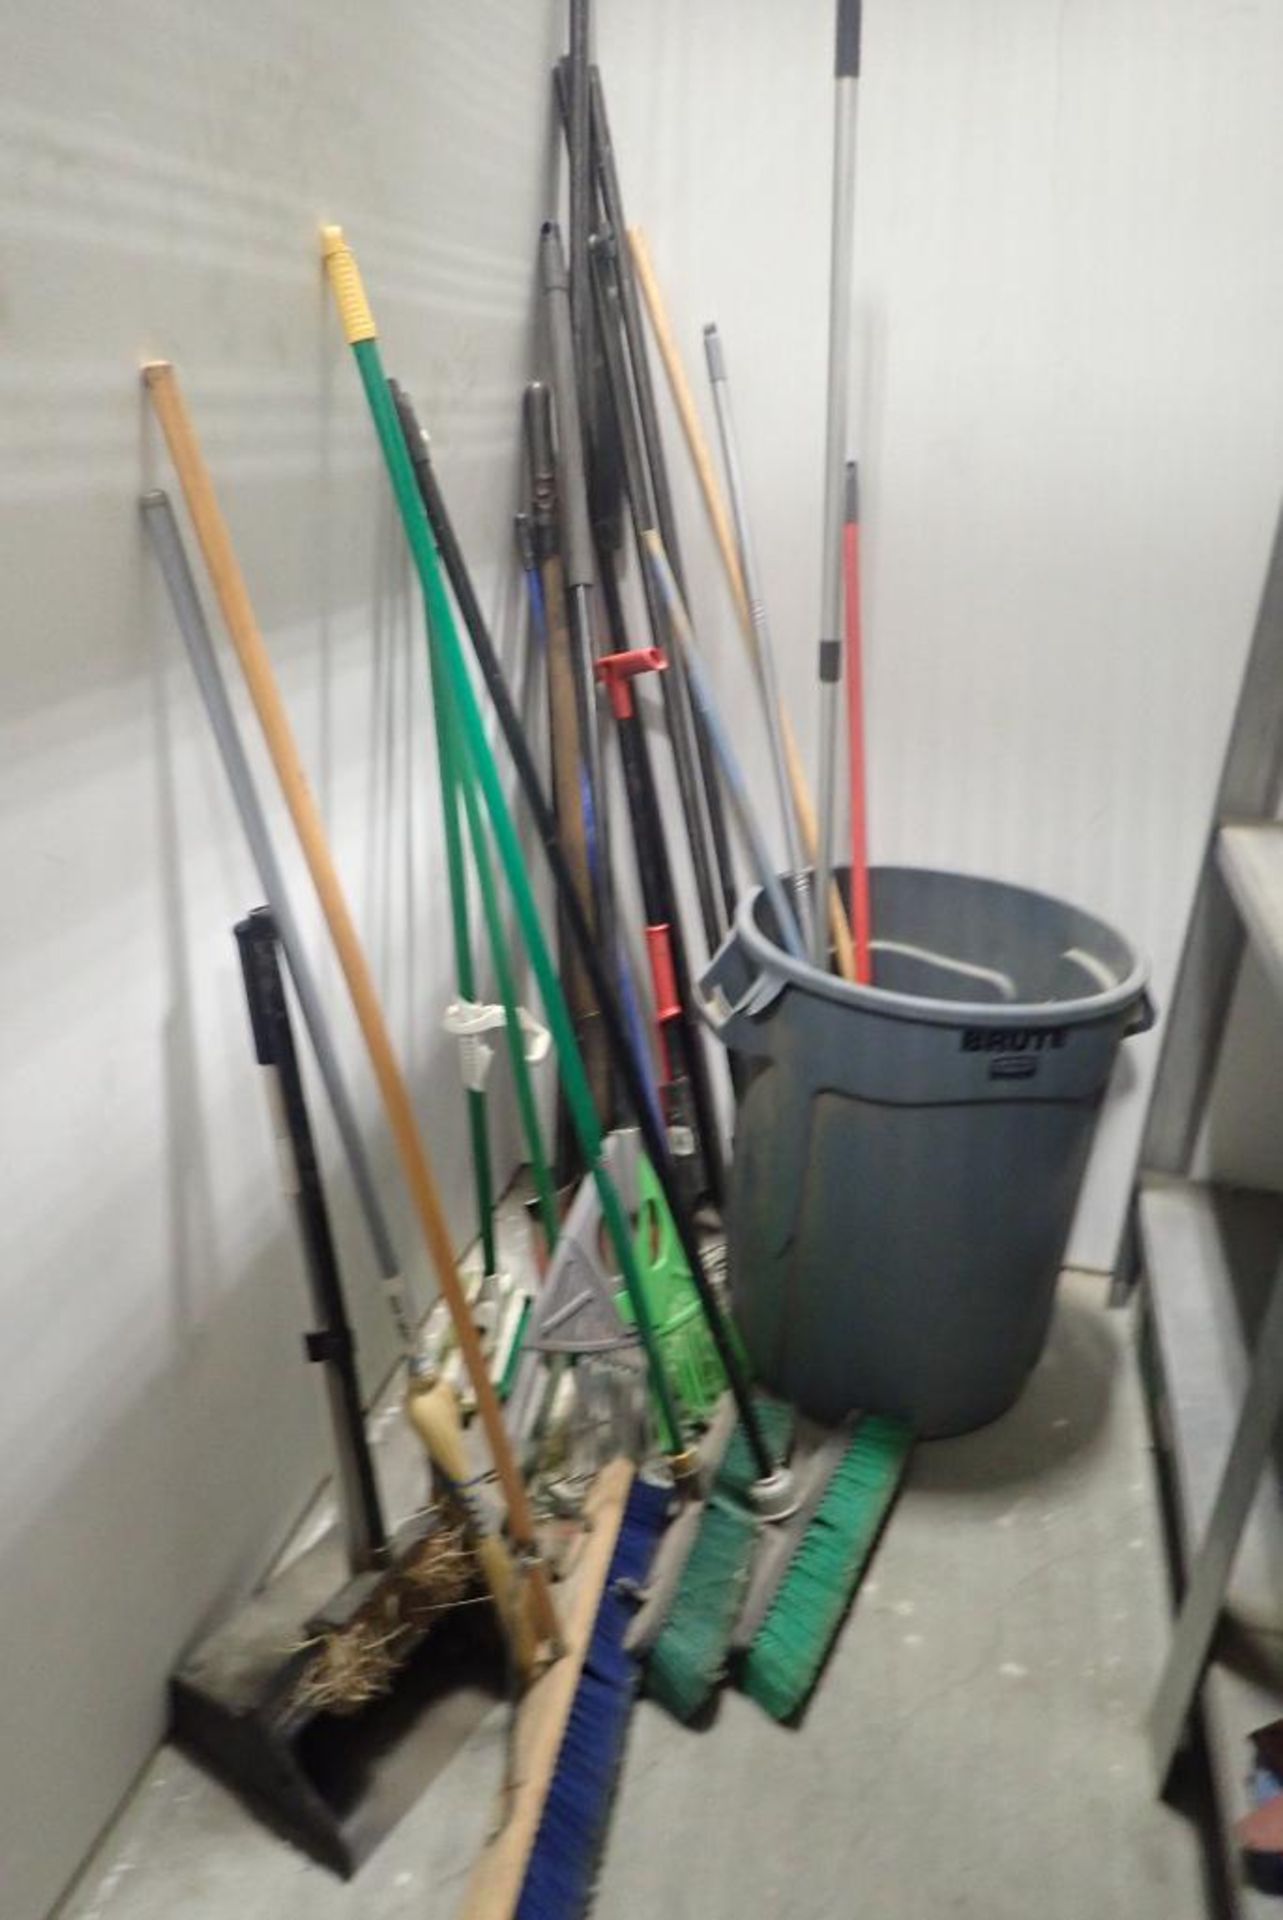 Lot of Asst. Brooms, Shovels, Pry Bars, Mops, etc.